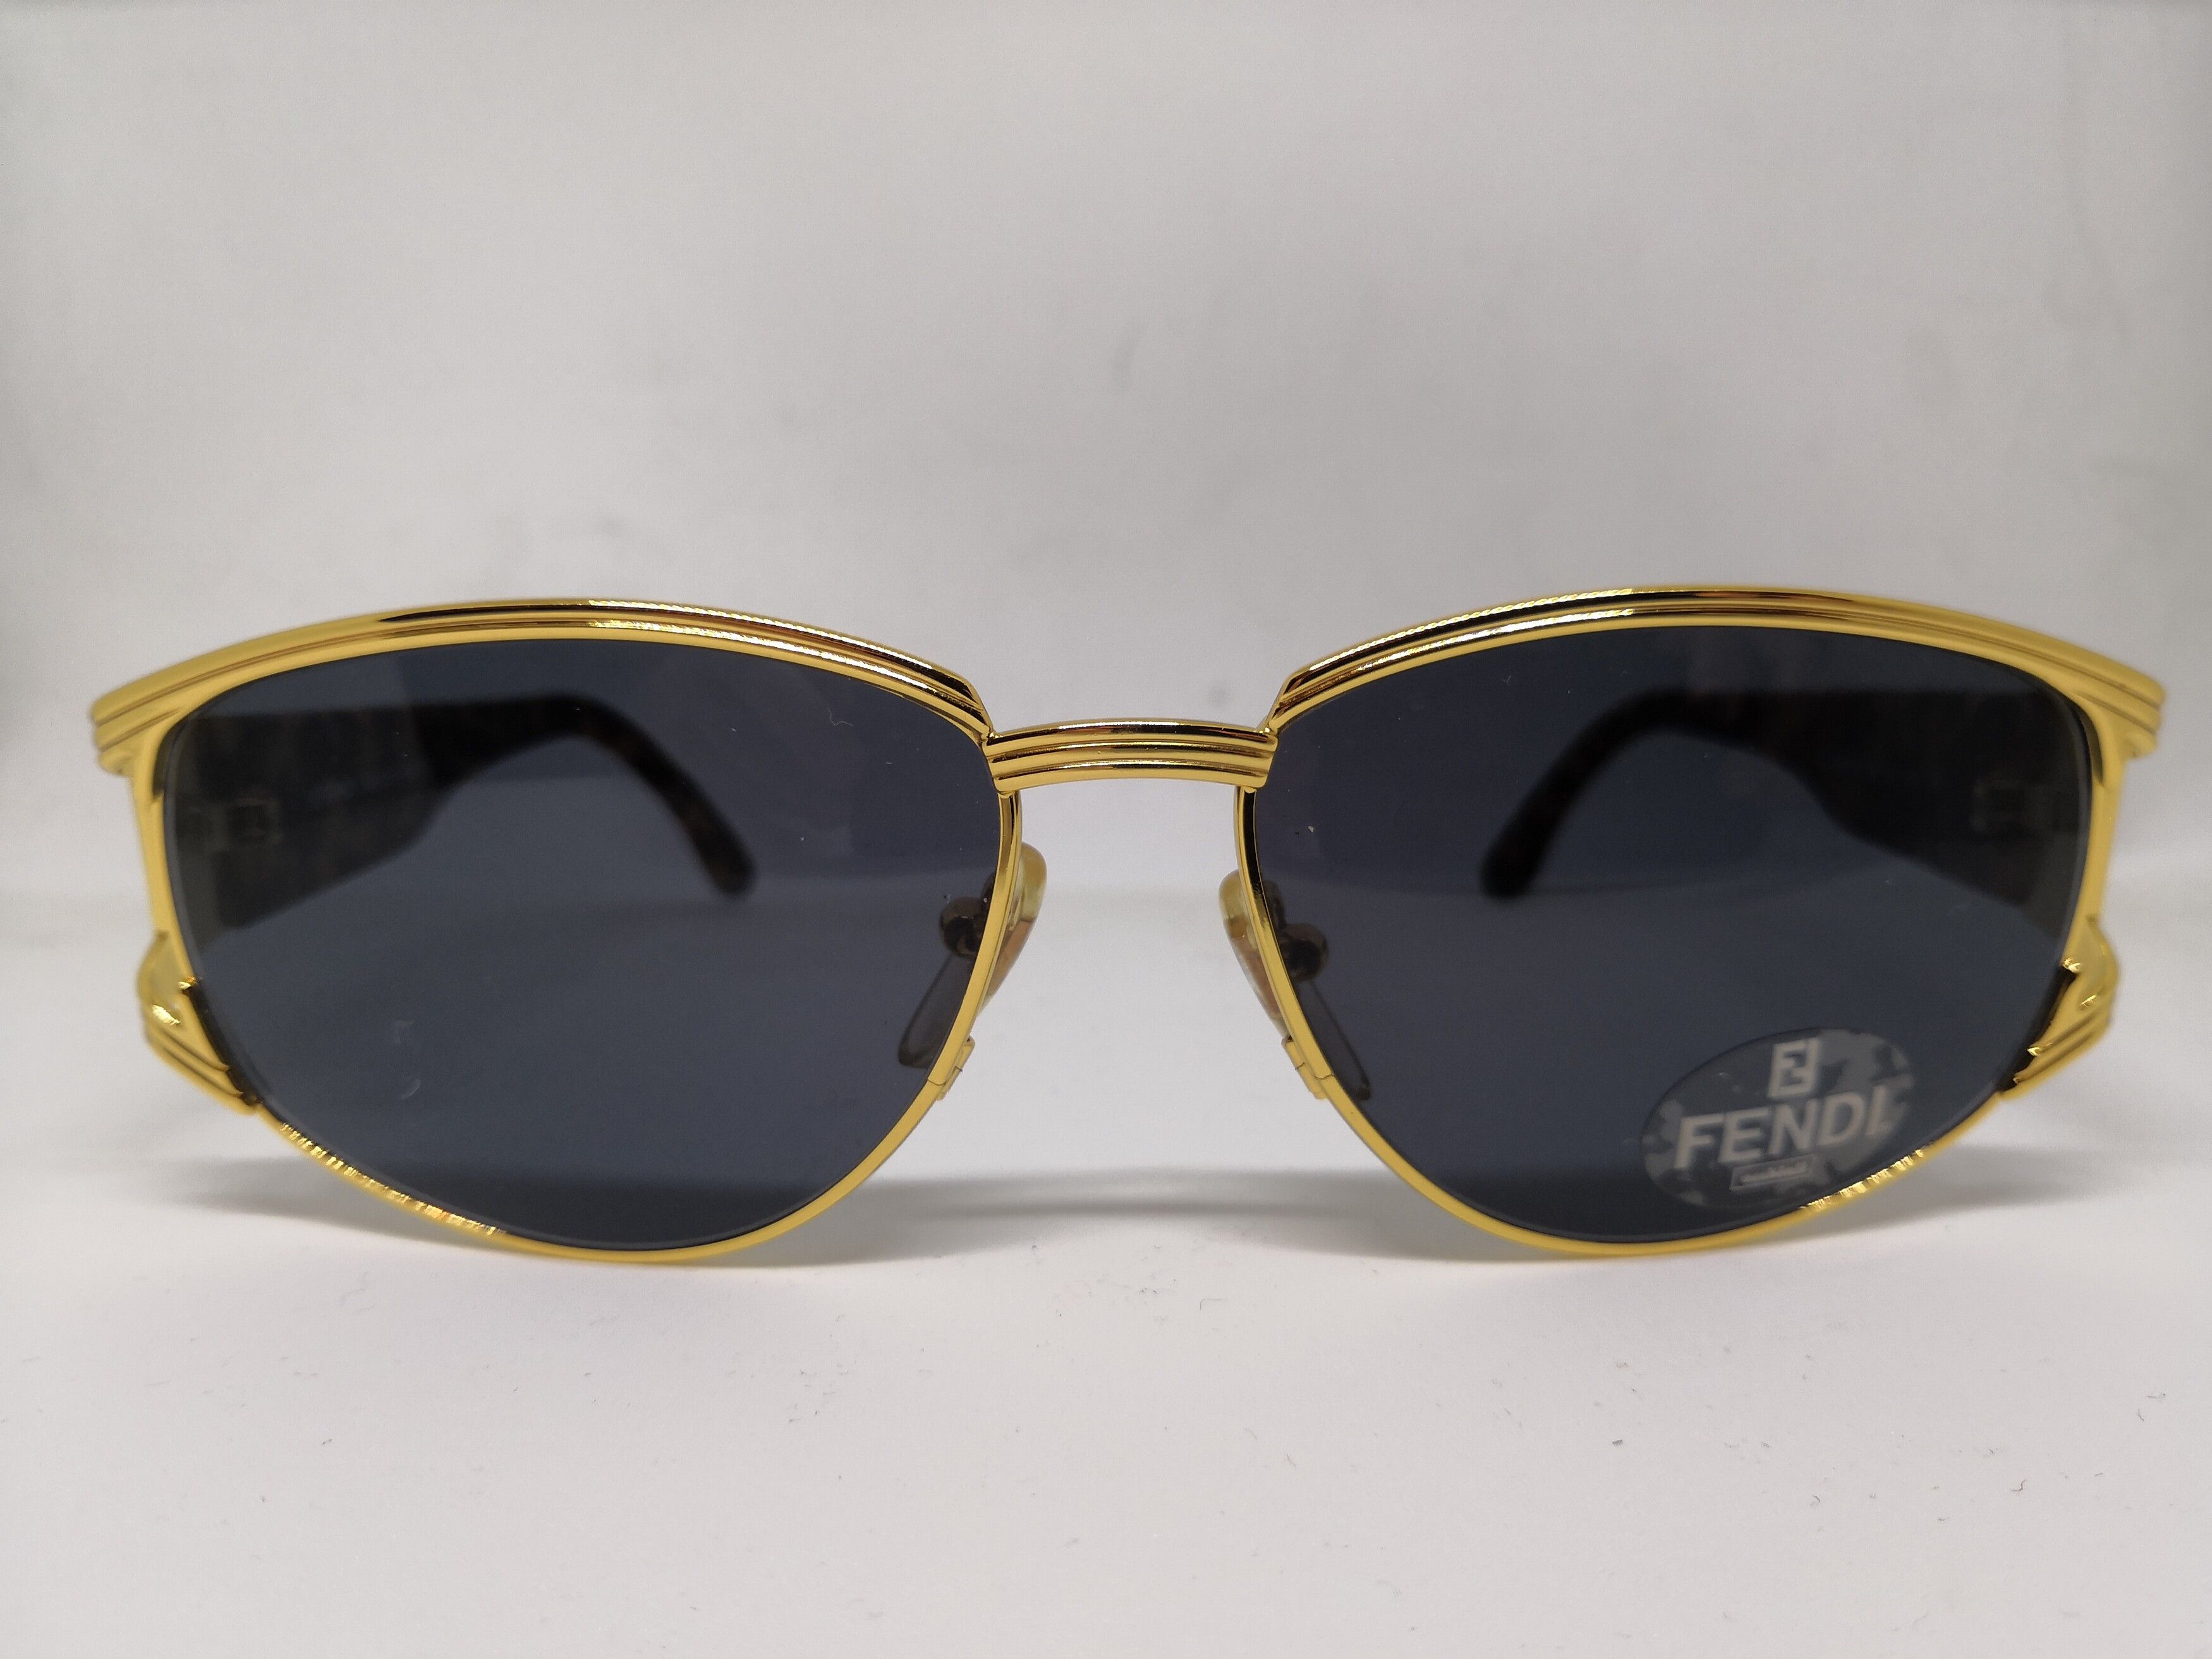 Deadstock Fendi Fs264 Sunglasses in Null, Men's Product Image